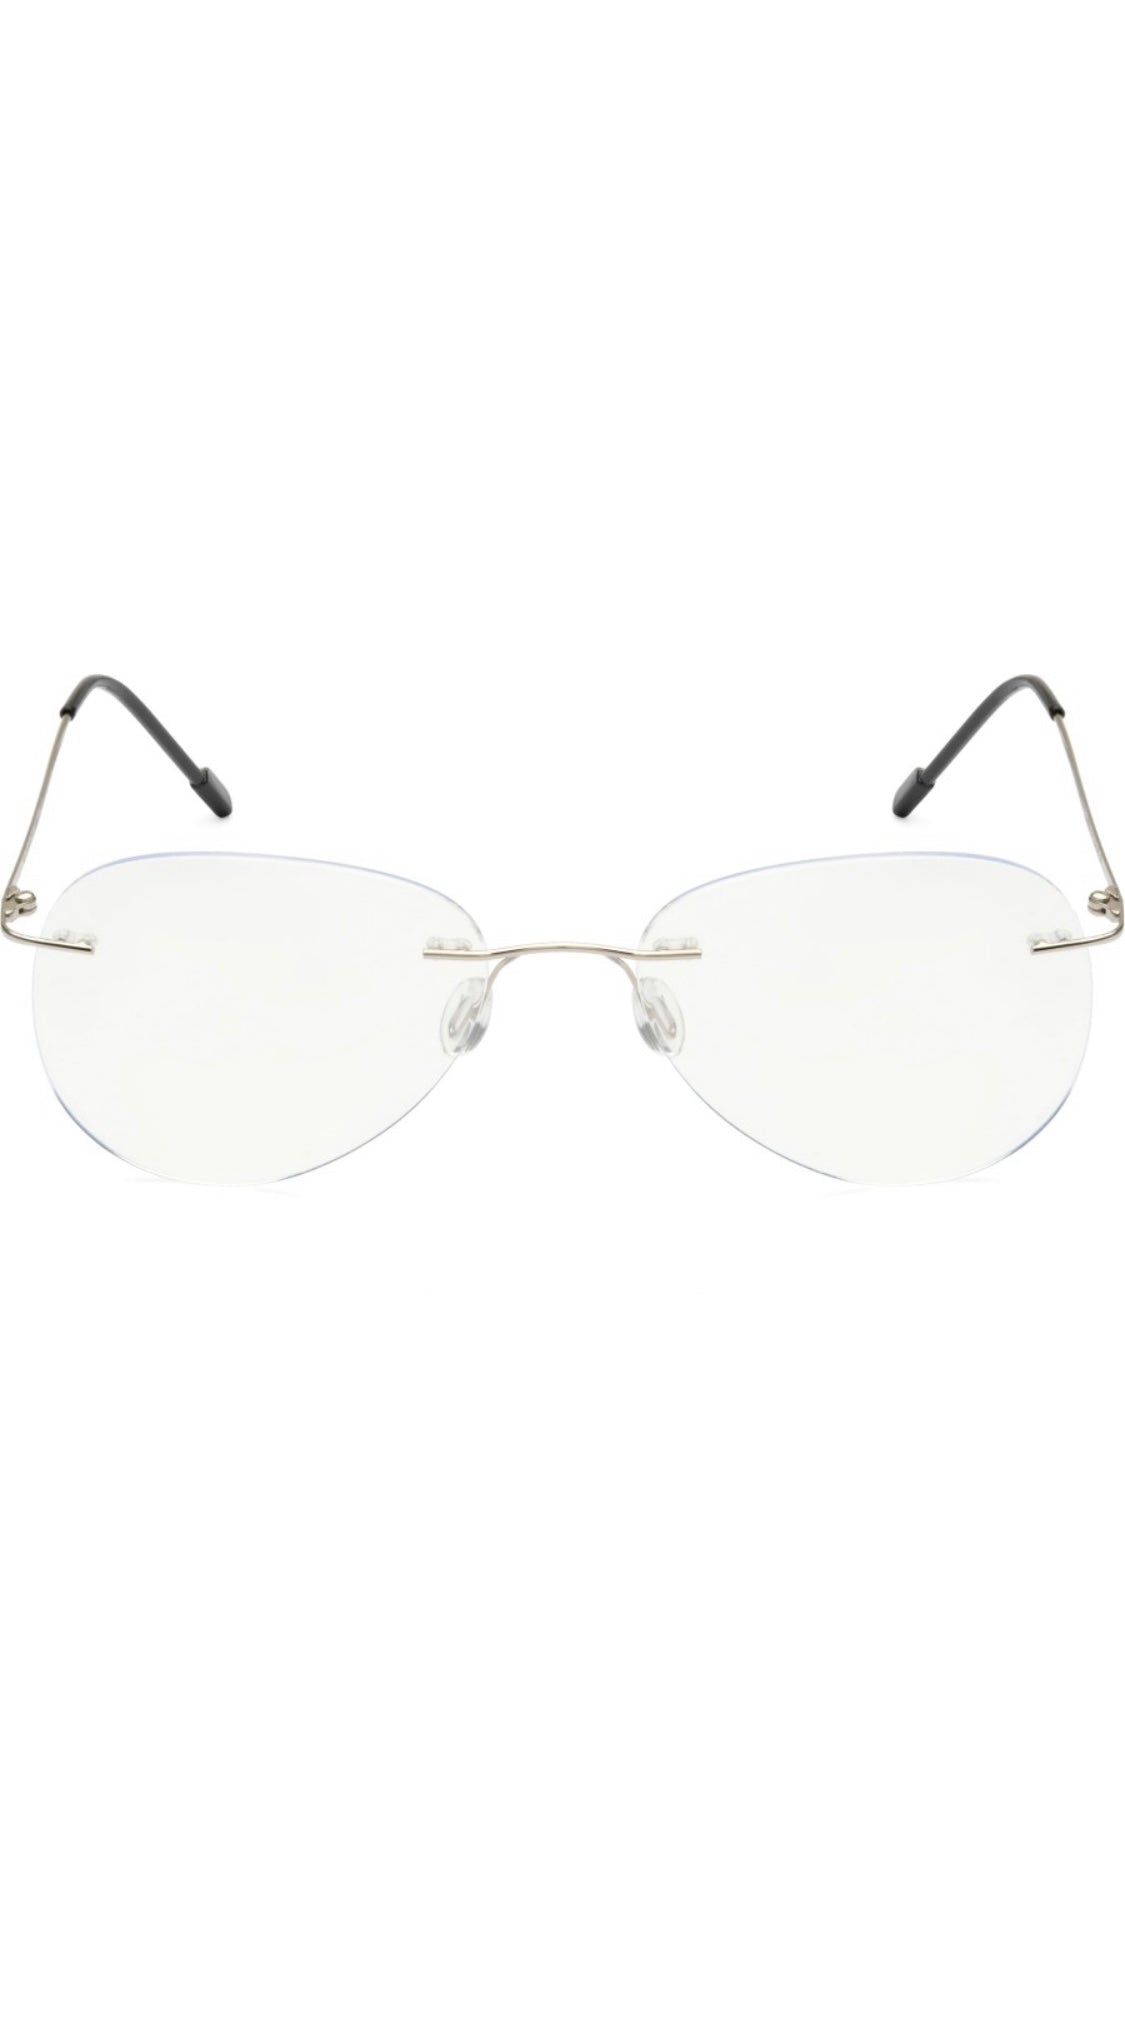 Jodykoes® Rimless Aviator Frame Zero Power Anti Glare Spectacle For Men and Women | Unisex Computer Eyeglasses Light Weight Aviator Frameless Eyewear (Silver) - Jodykoes ®